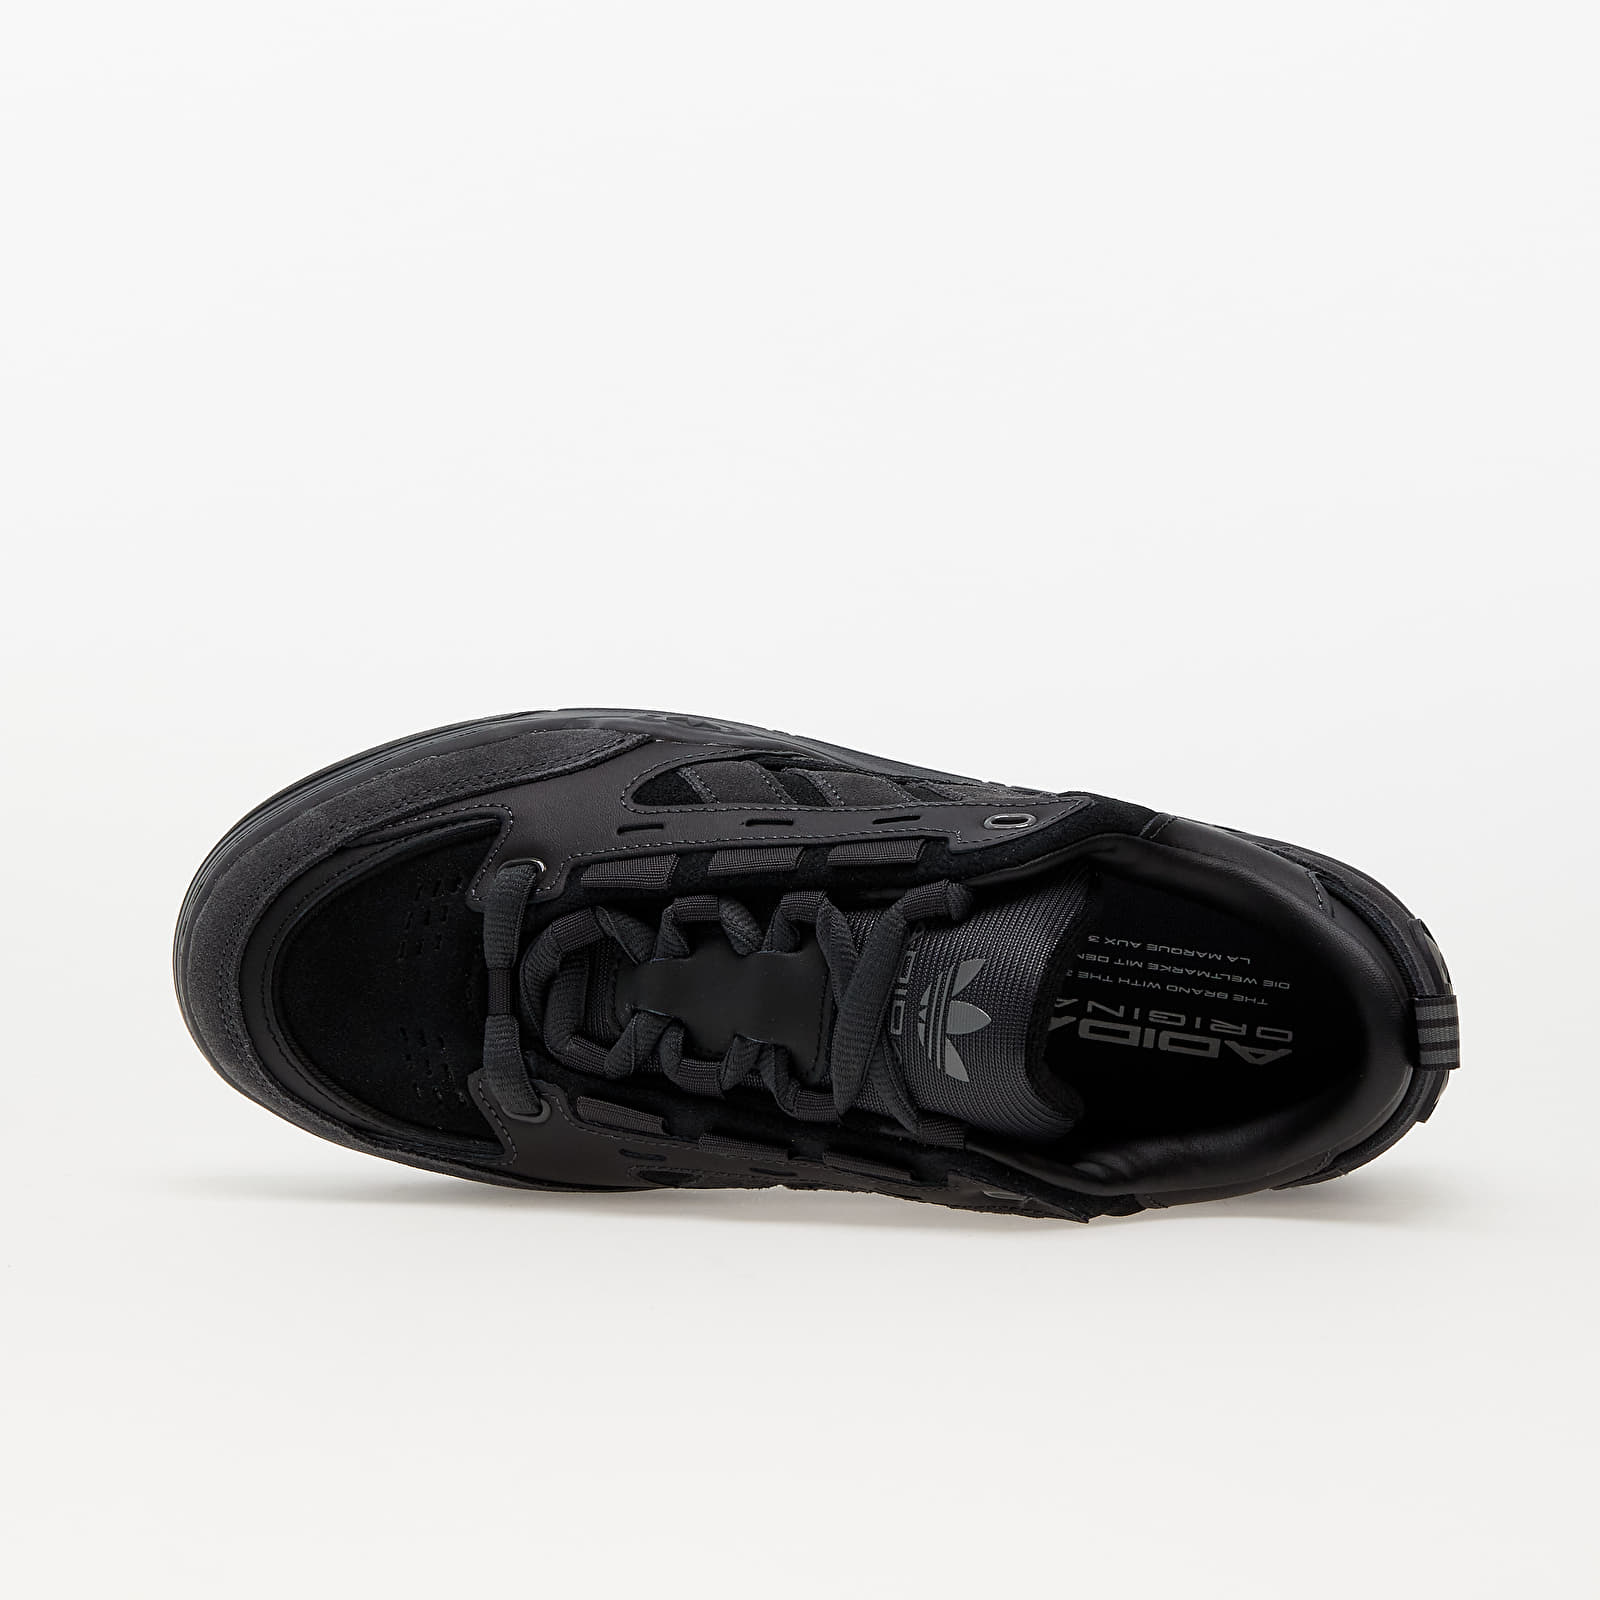 adidas Core Utility shoes Black Black/ Adi2000 Black/ Utility | Footshop Men\'s